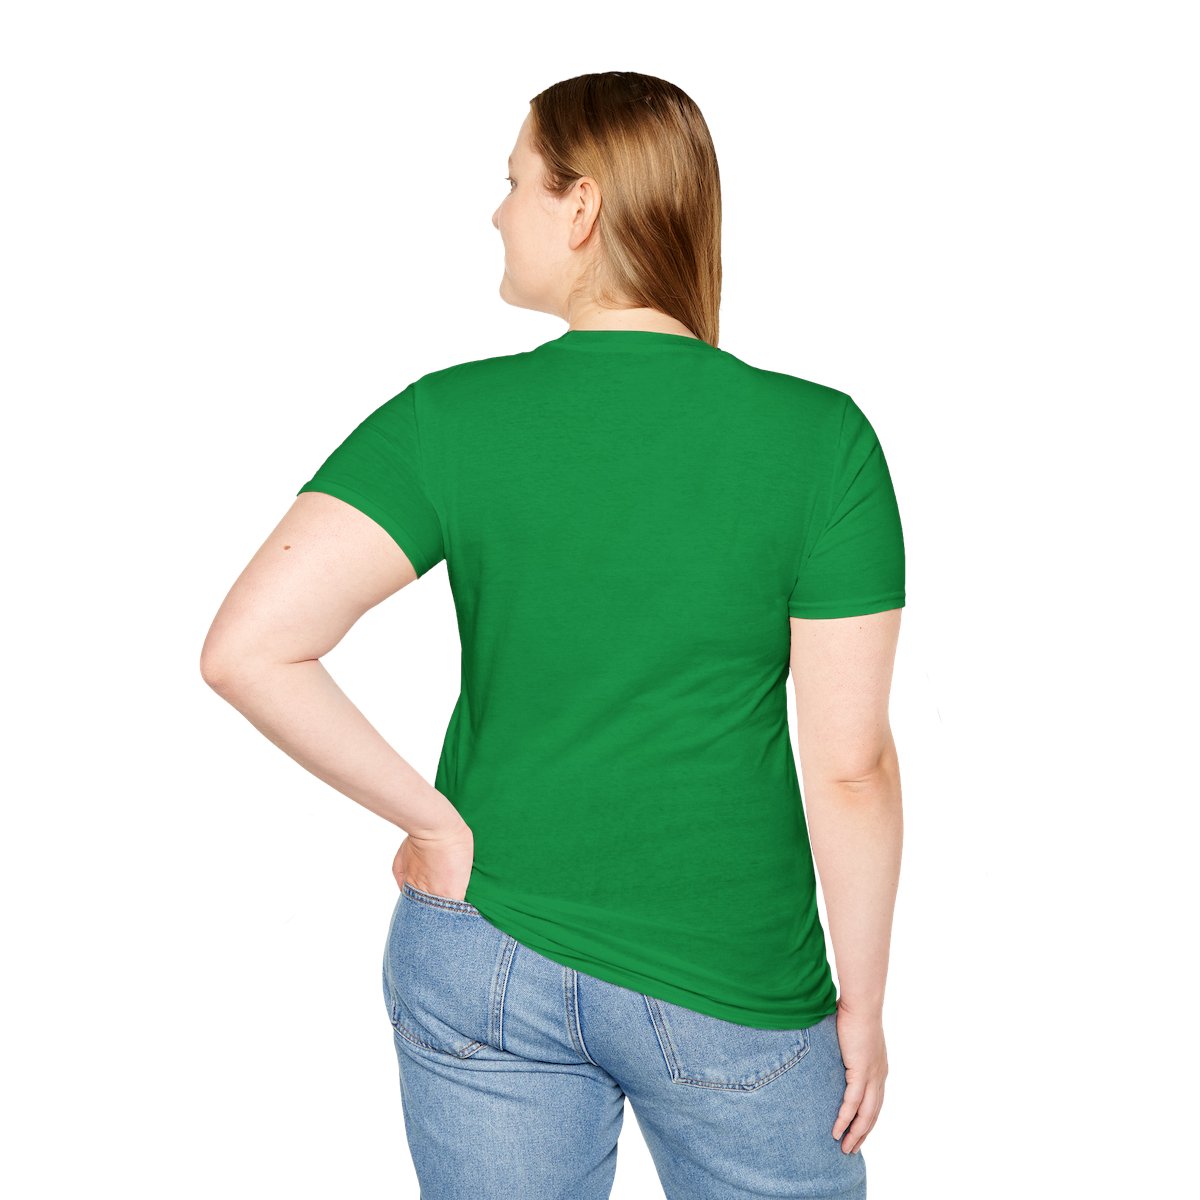 Happy St Patrick's Day, Proudly 1/4 Irish Celebration Tee!  - T-Shirt product thumbnail image